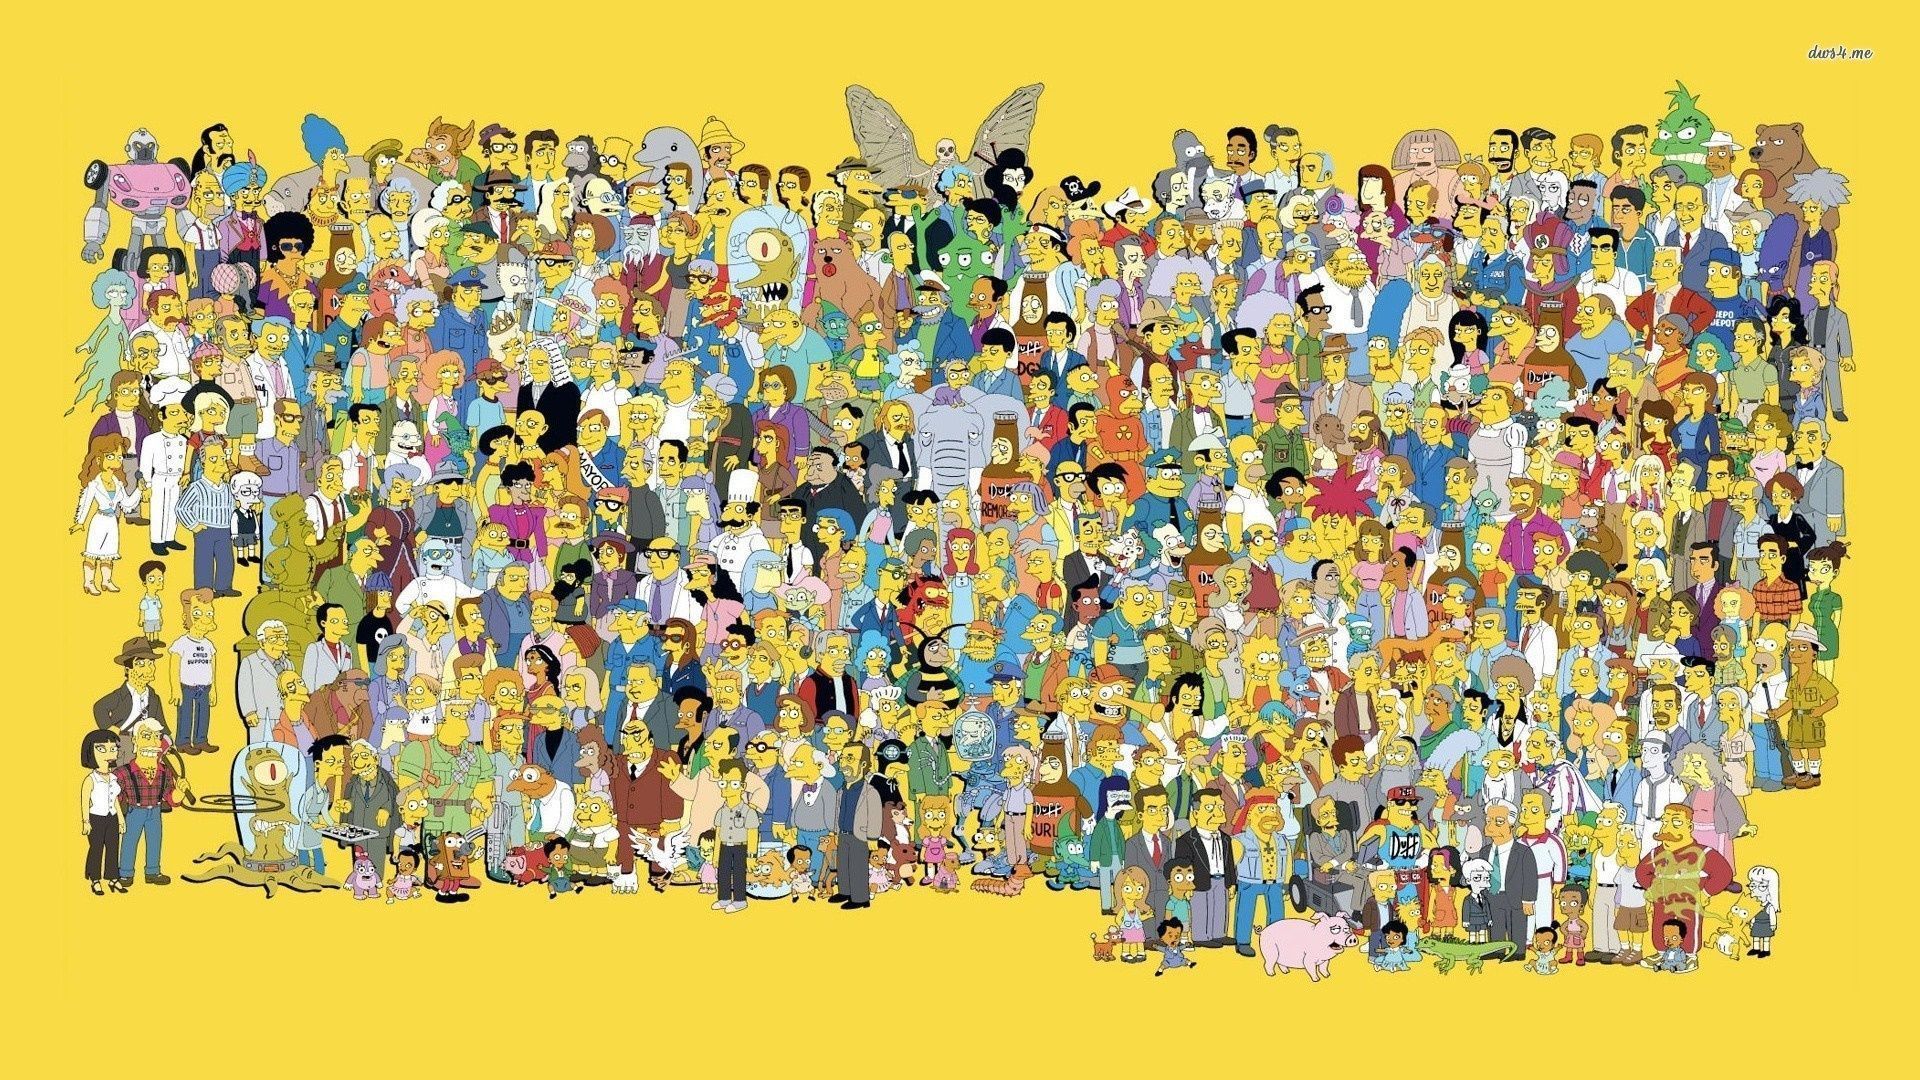 The simpsons family portrait - The Simpsons, Lisa Simpson, Bart Simpson